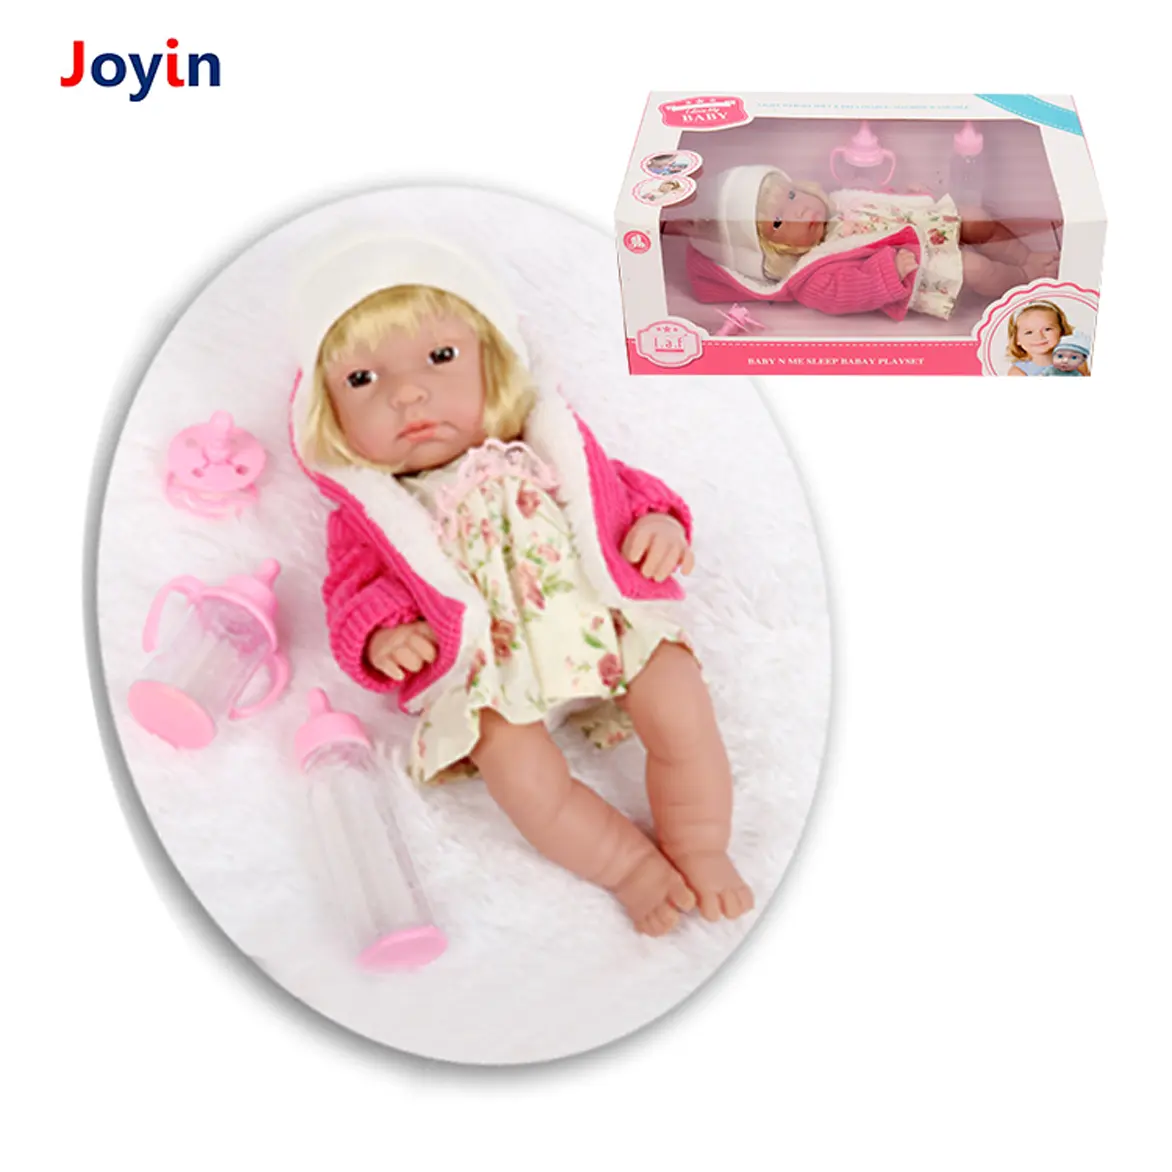 12 Inch Reborn Brinquedos do bebê Boneca para menina Bonecas Modelo de Borracha Floral Saia Rosa Jacket w/Chupeta & Garrafa Gift Set Piscando Olhos